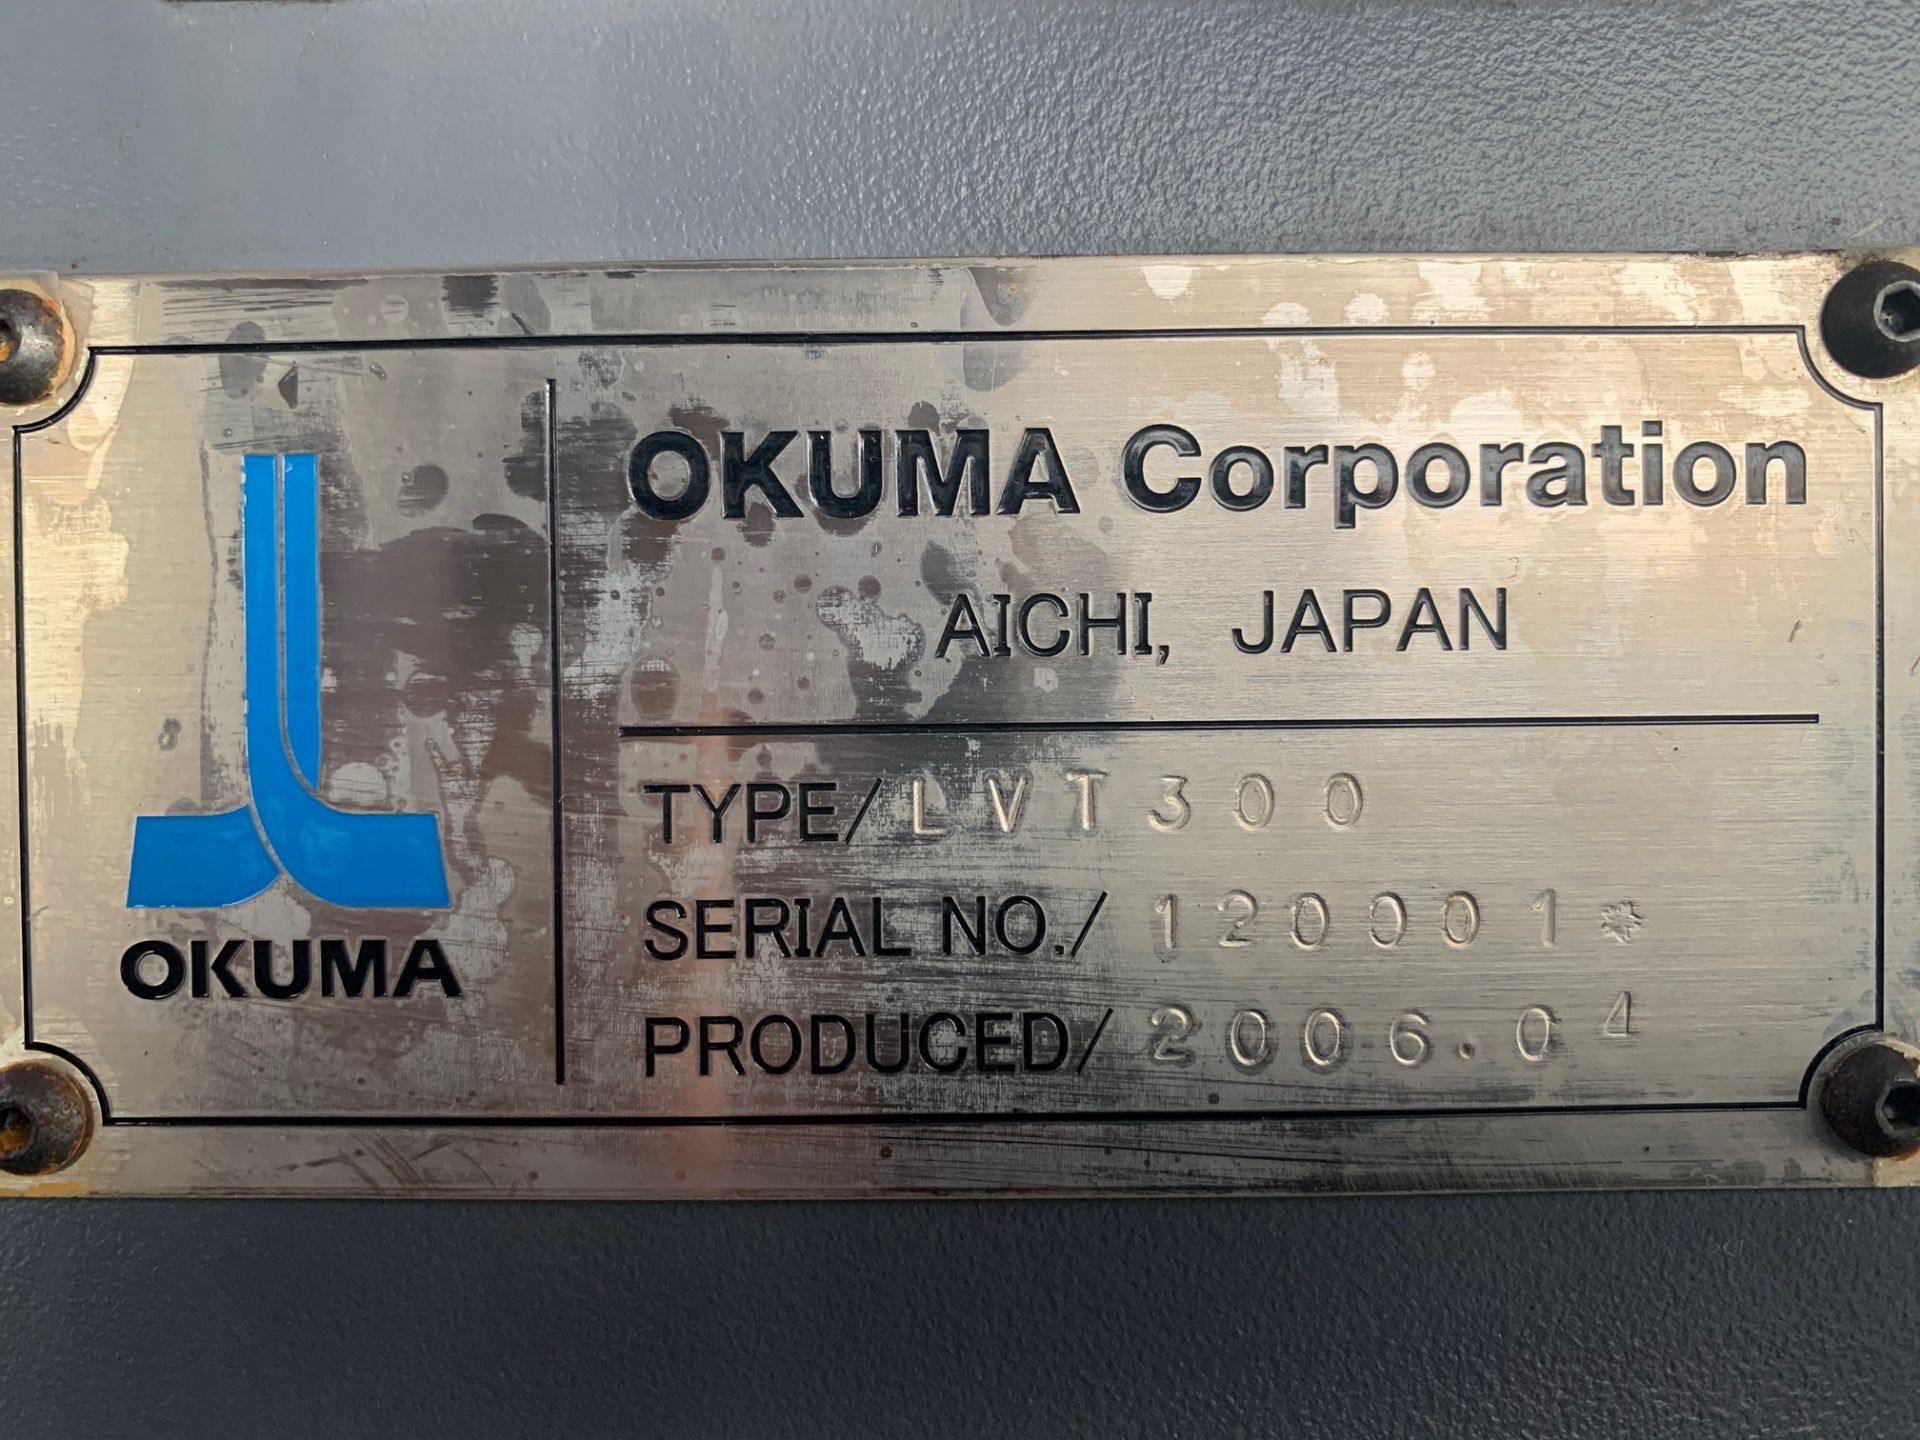 2006 OKUMA LVT-300 CNC VERTICAL TURNING CENTER, OKUMA OSP-P100L CNC CONTROLLER, 12-STATION VDI - Image 11 of 14